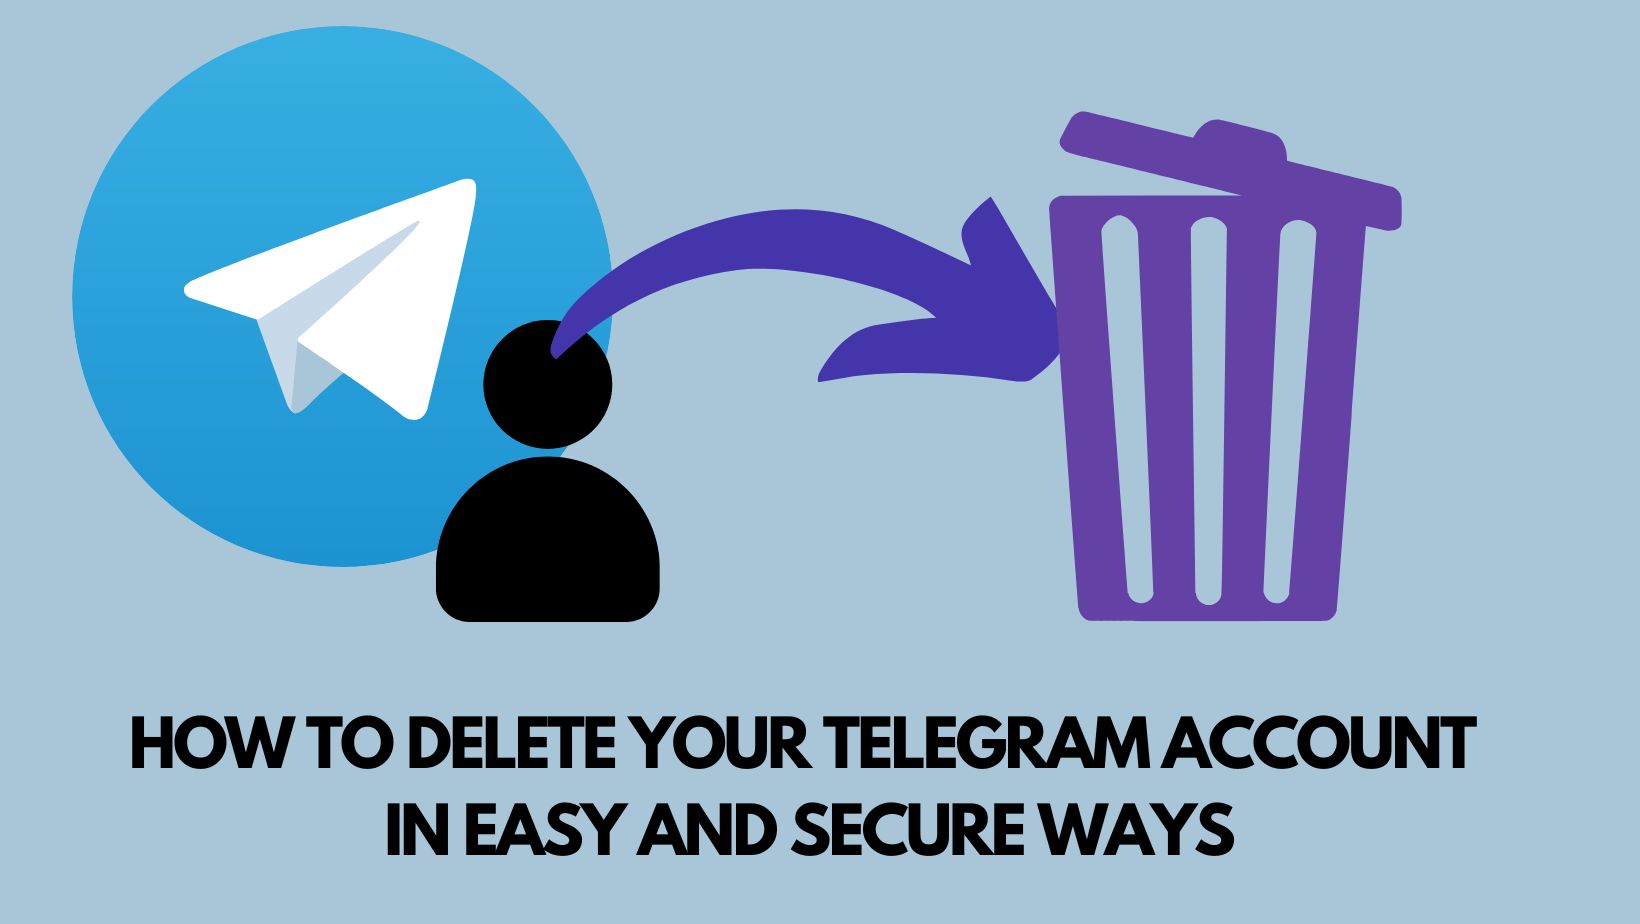 Https my telegram org deactivate. Deleted account Telegram. Telegram account. My Telegram org delete account.